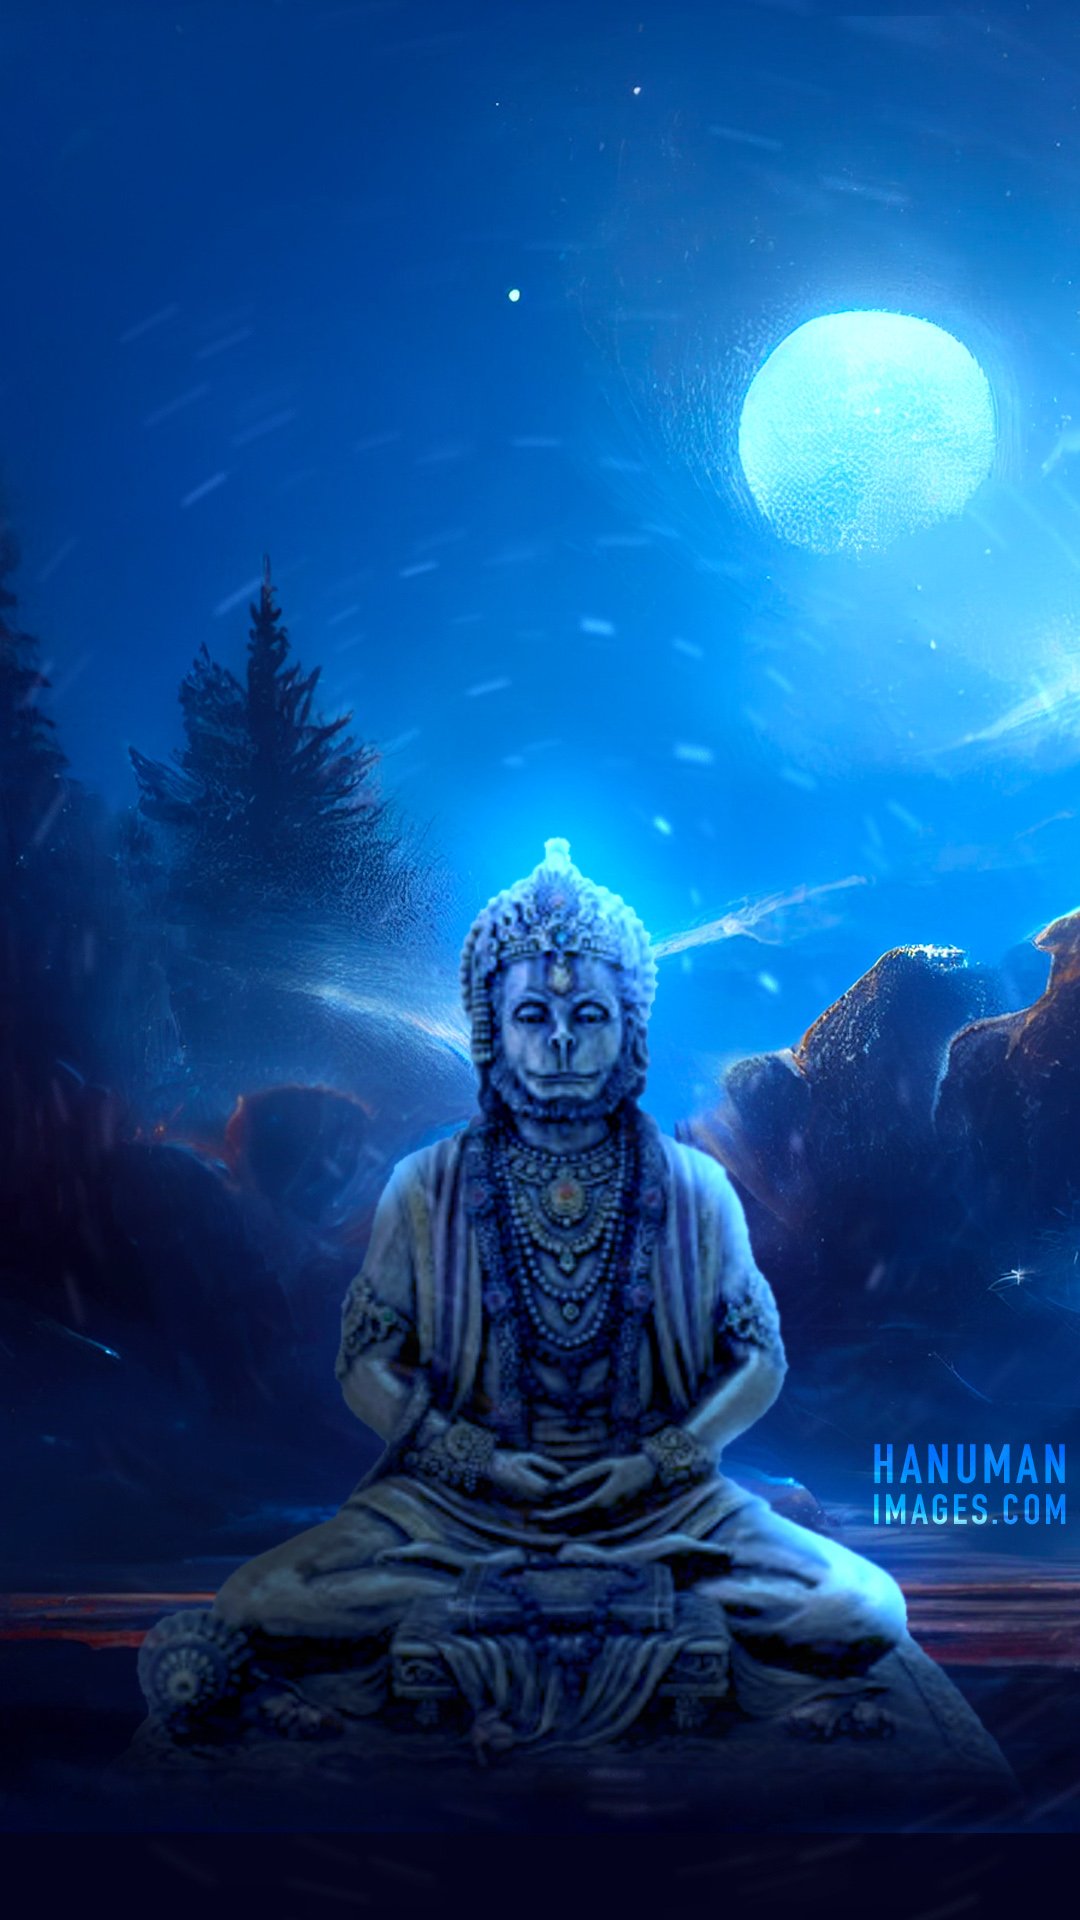 sarv shaktiman lord hanuman minimalist phone wallpaper HD  Hanuman images